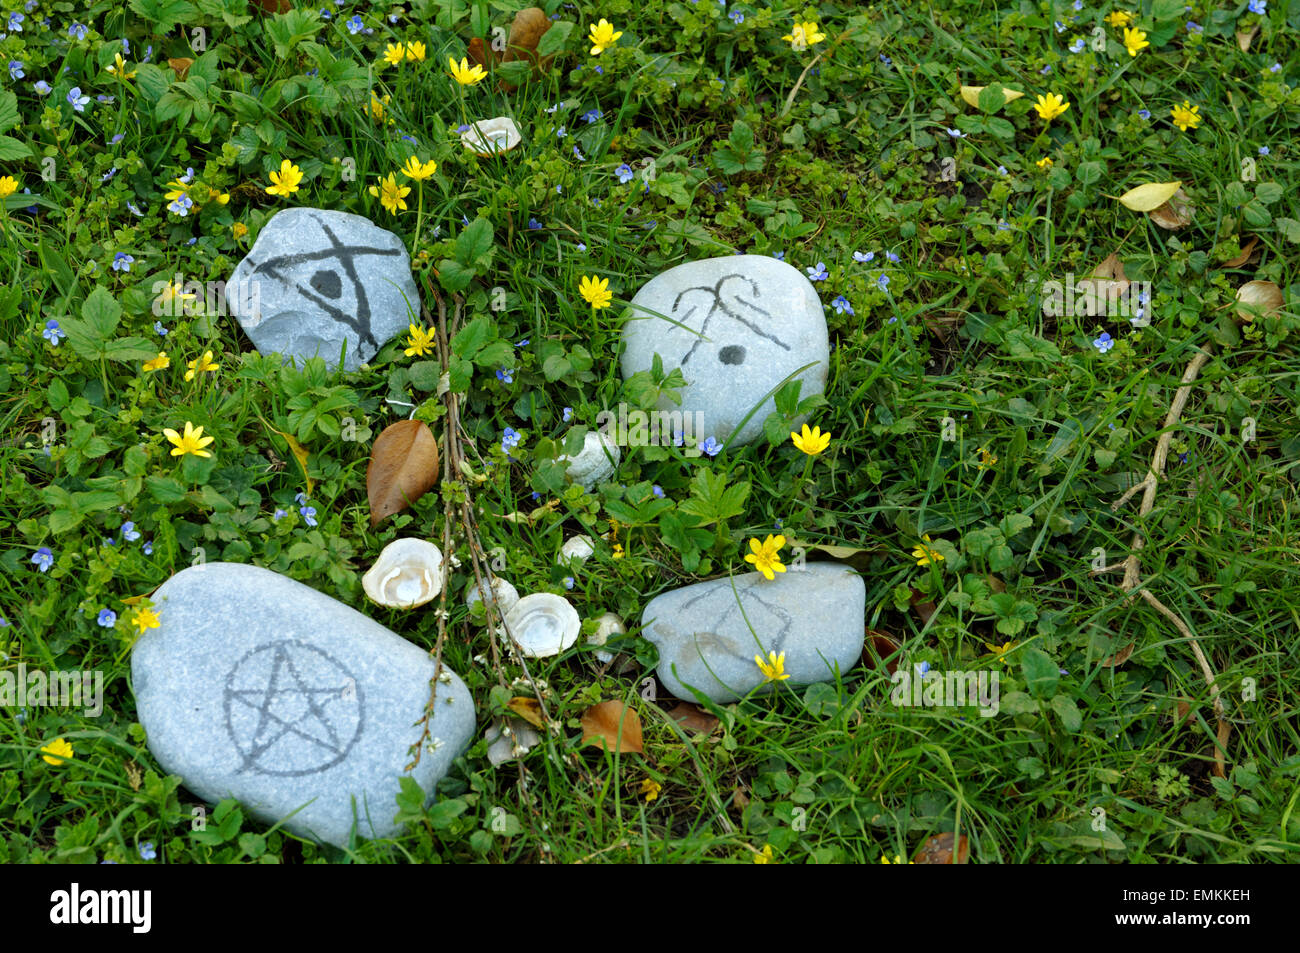 Wicca symbols on pebbles. Stock Photo